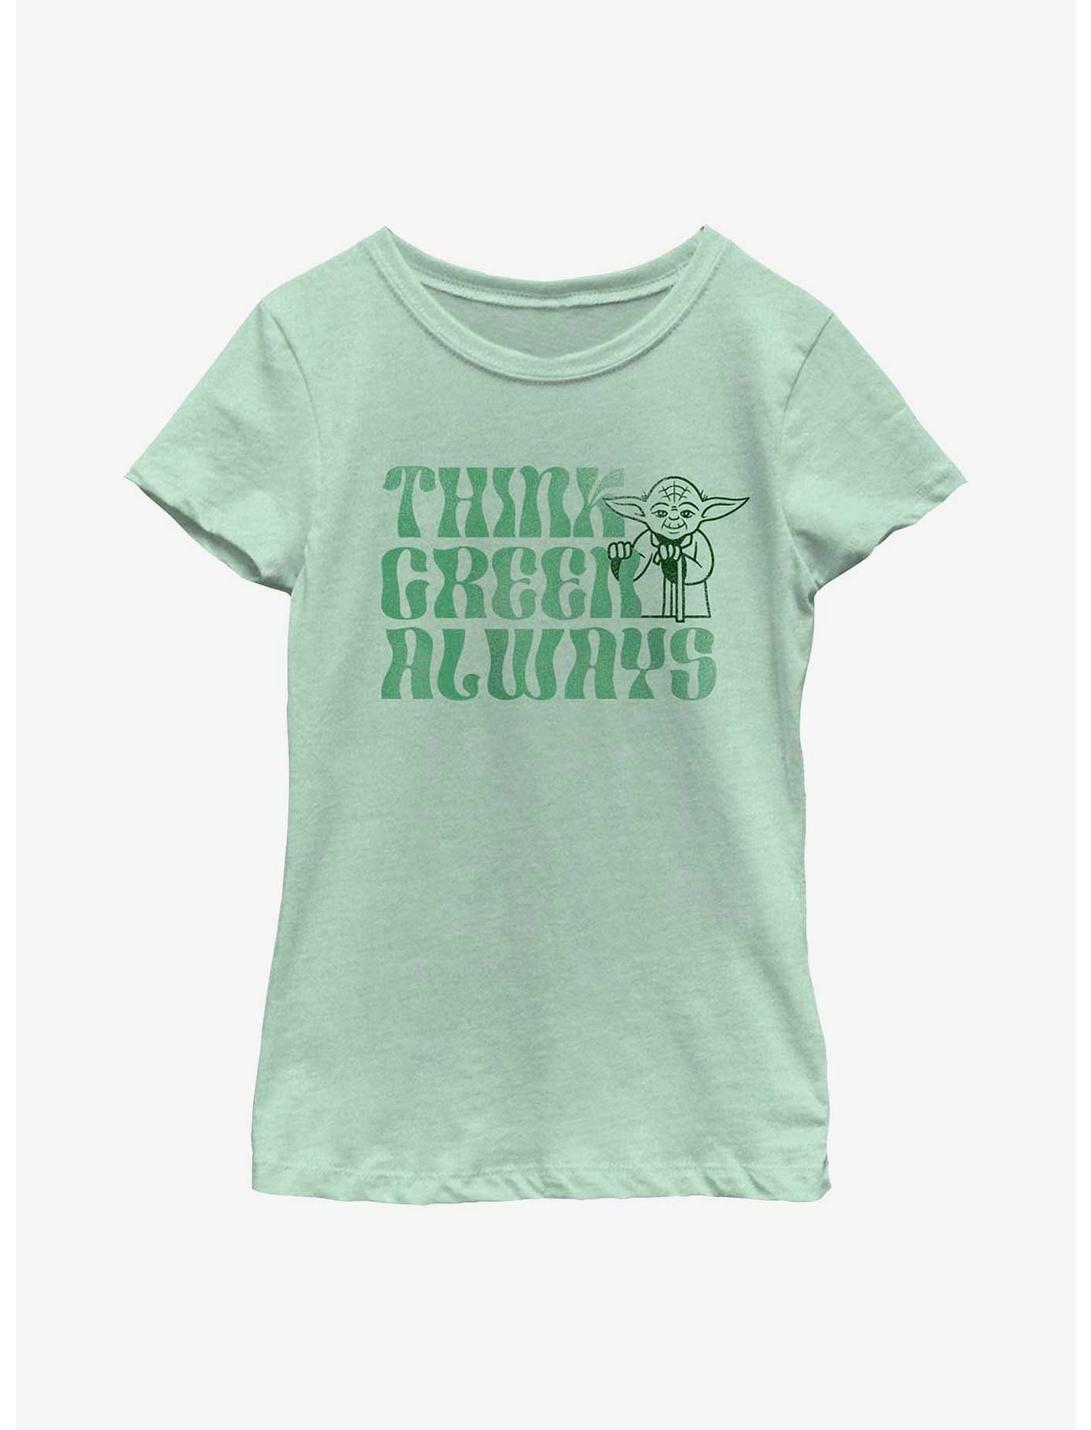 Star Wars Yoda Think Green Always Youth Girls T-Shirt, MINT, hi-res